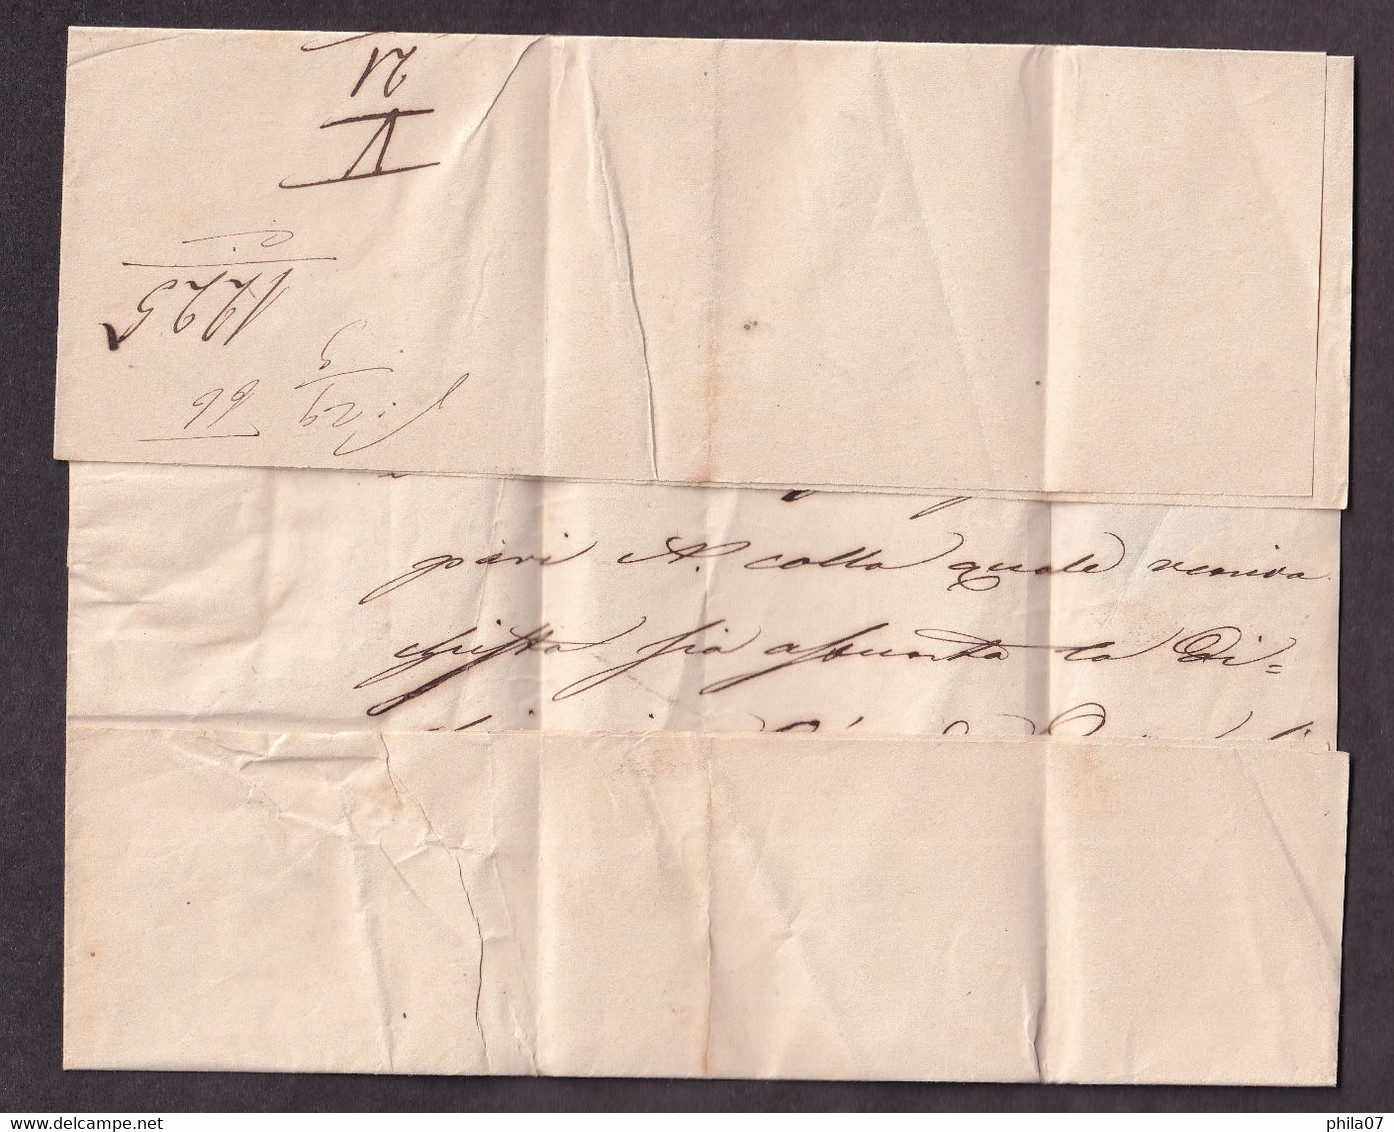 PRE-PHILATELY Croatia/Austria - Letter With Complete Content Sent From RAGUSA (Dubrovnik) To LESINA (Hvar) 26.09. 1866. - Briefe U. Dokumente